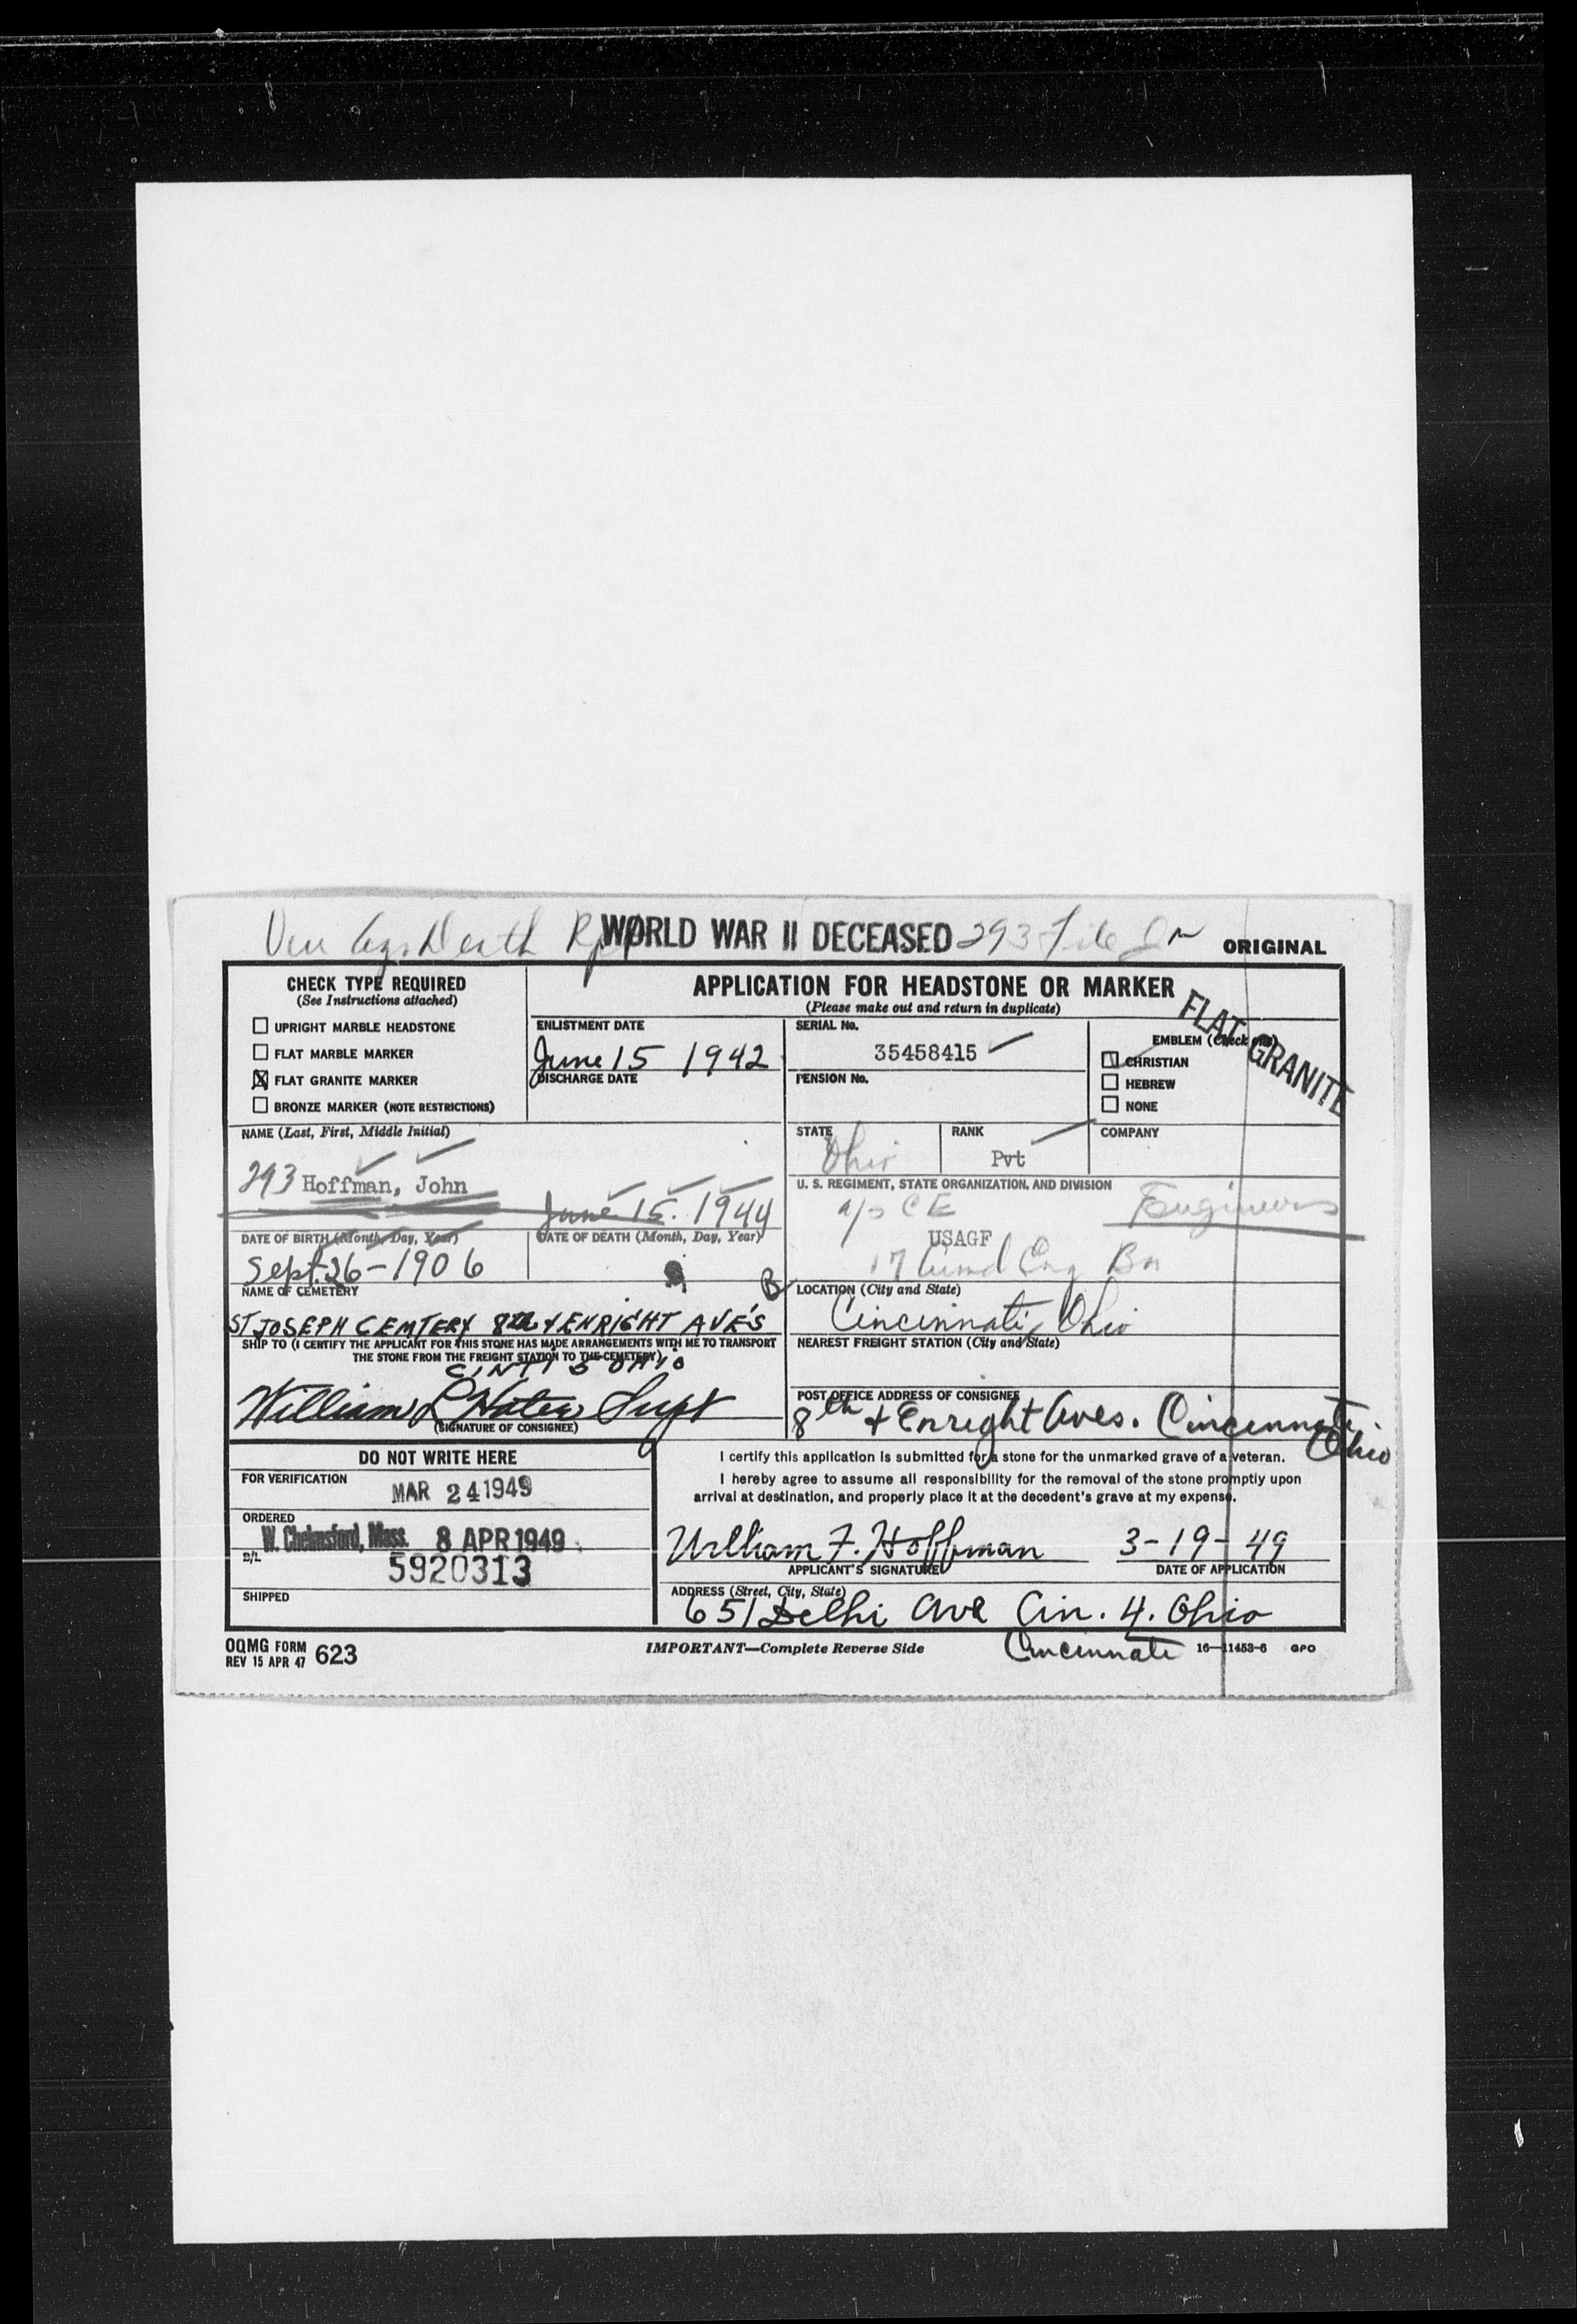 Headstone application John Hoffman 6-15-1944